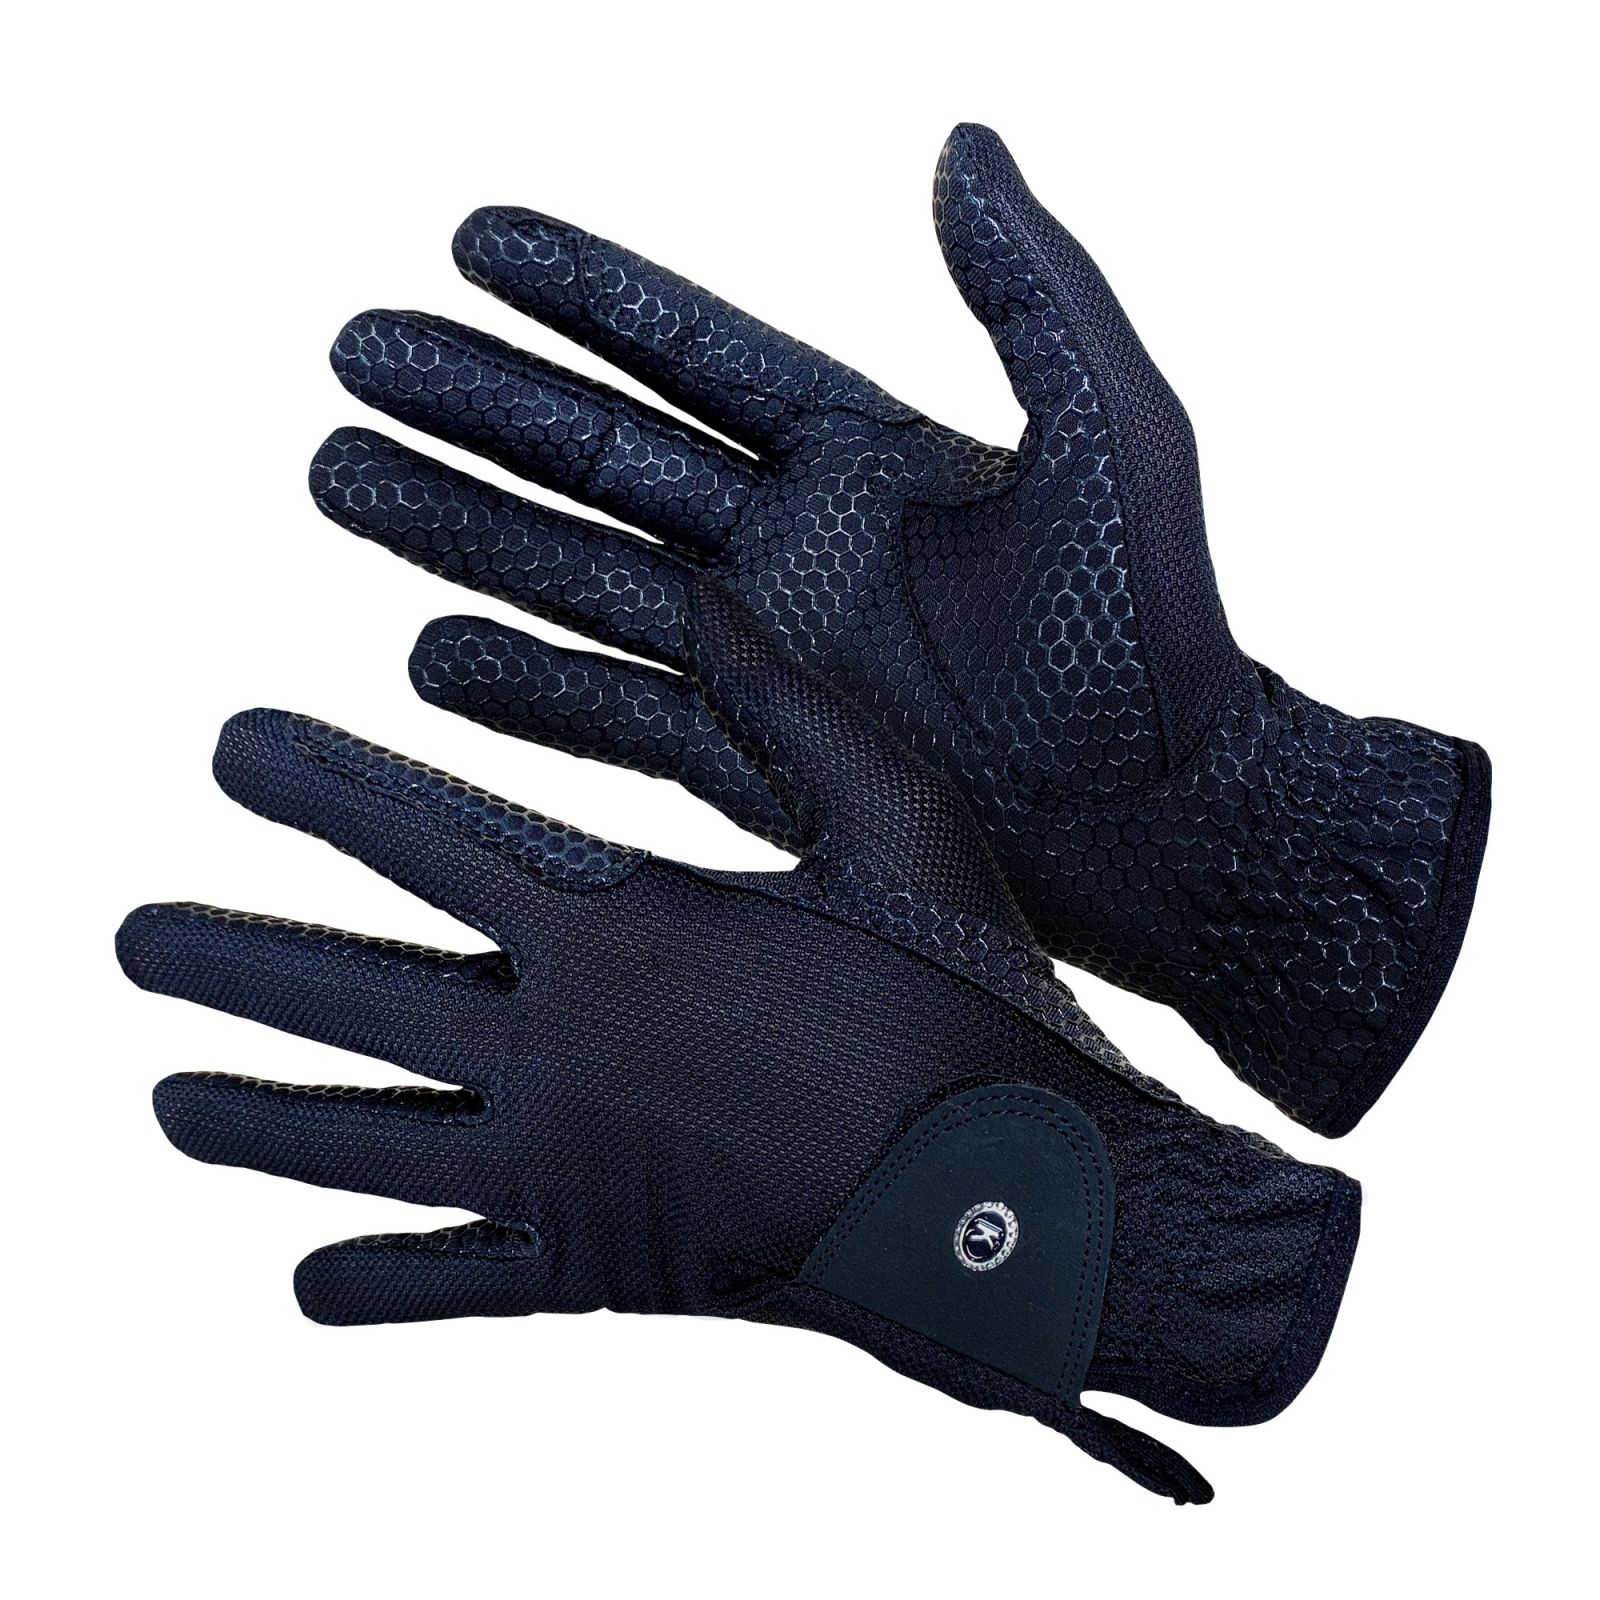 KM Elite Silicone Gloves Black